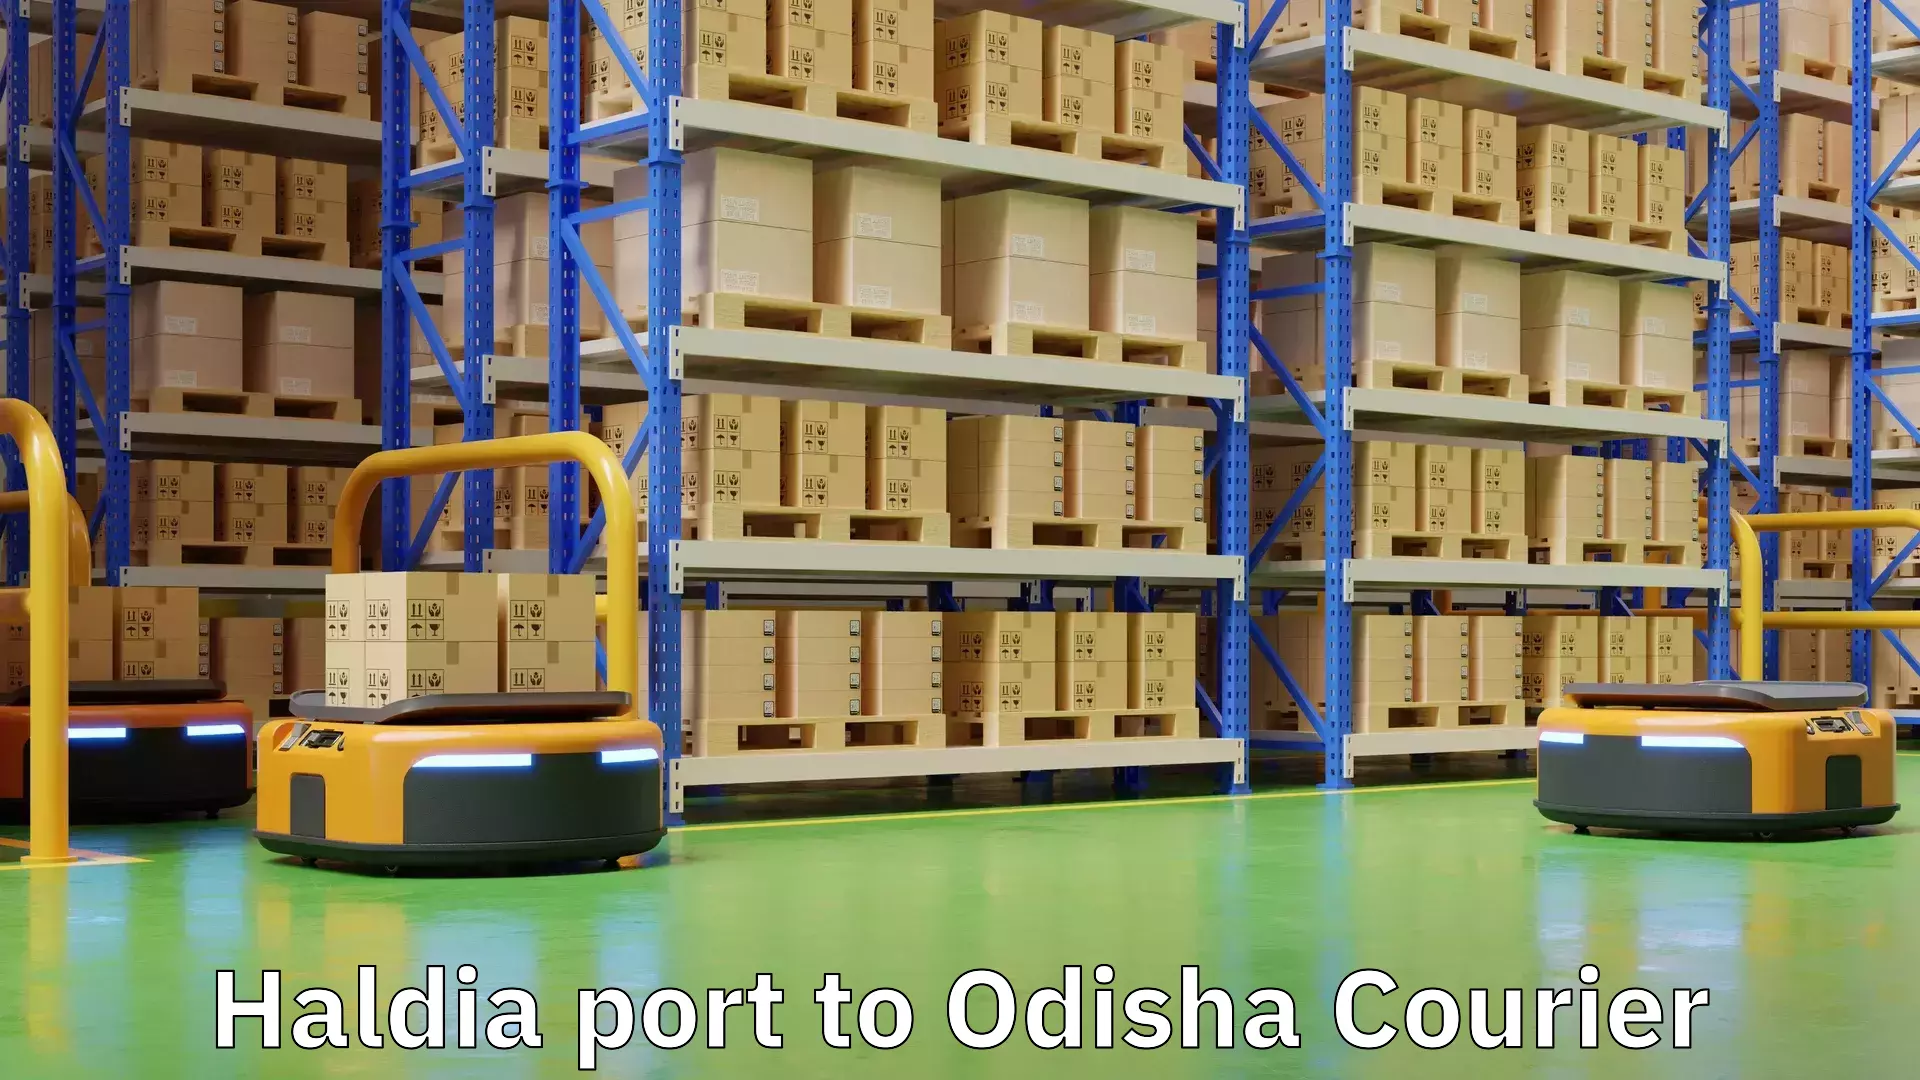 Advanced package delivery Haldia port to Odisha